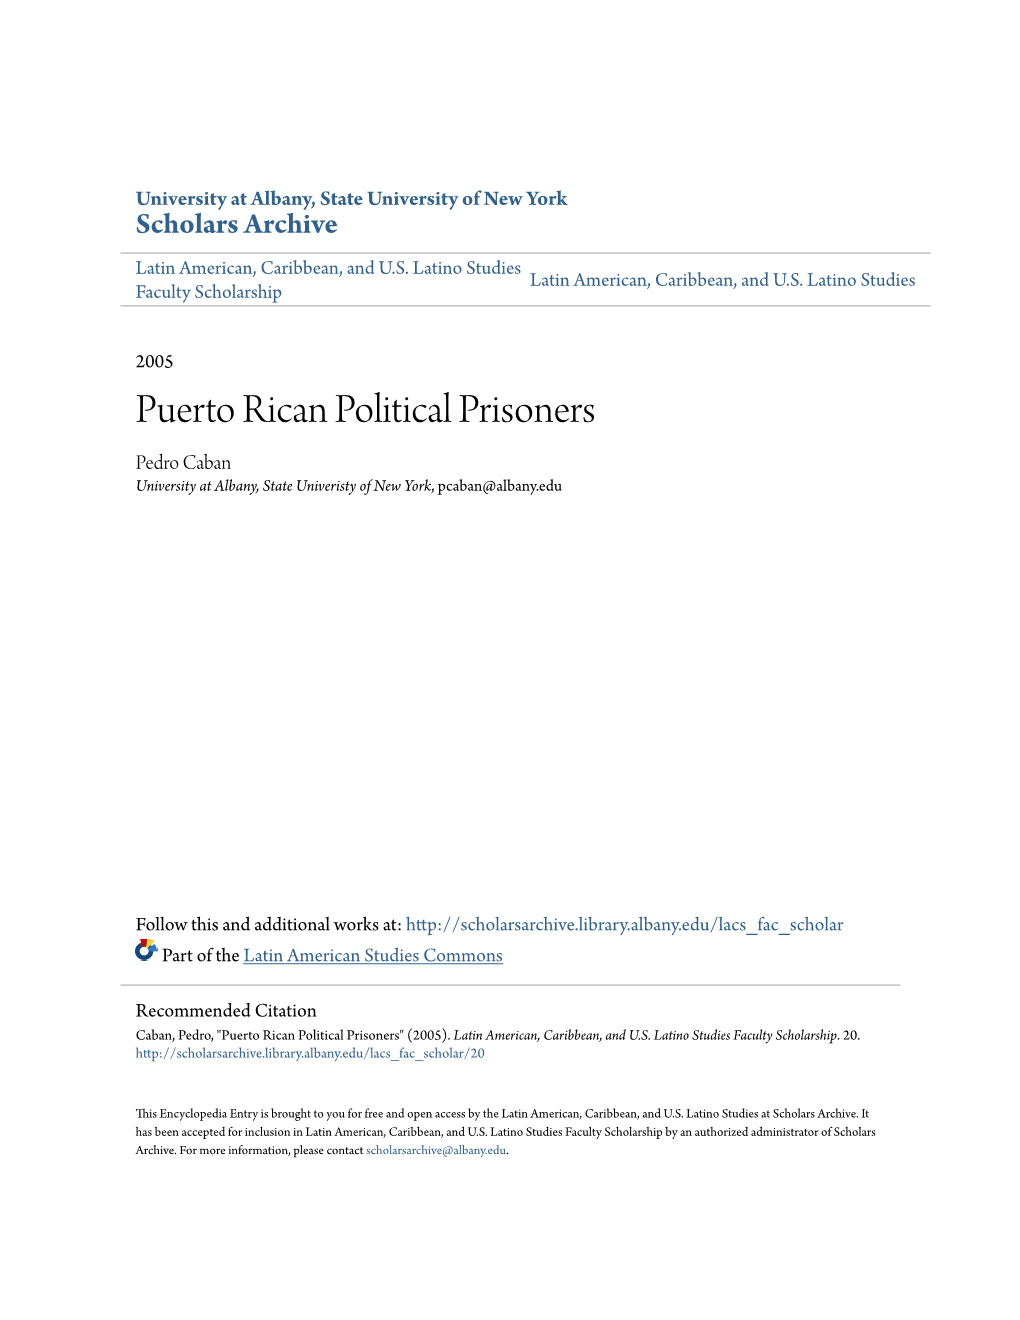 Puerto Rican Political Prisoners Pedro Caban University at Albany, State Univeristy of New York, Pcaban@Albany.Edu